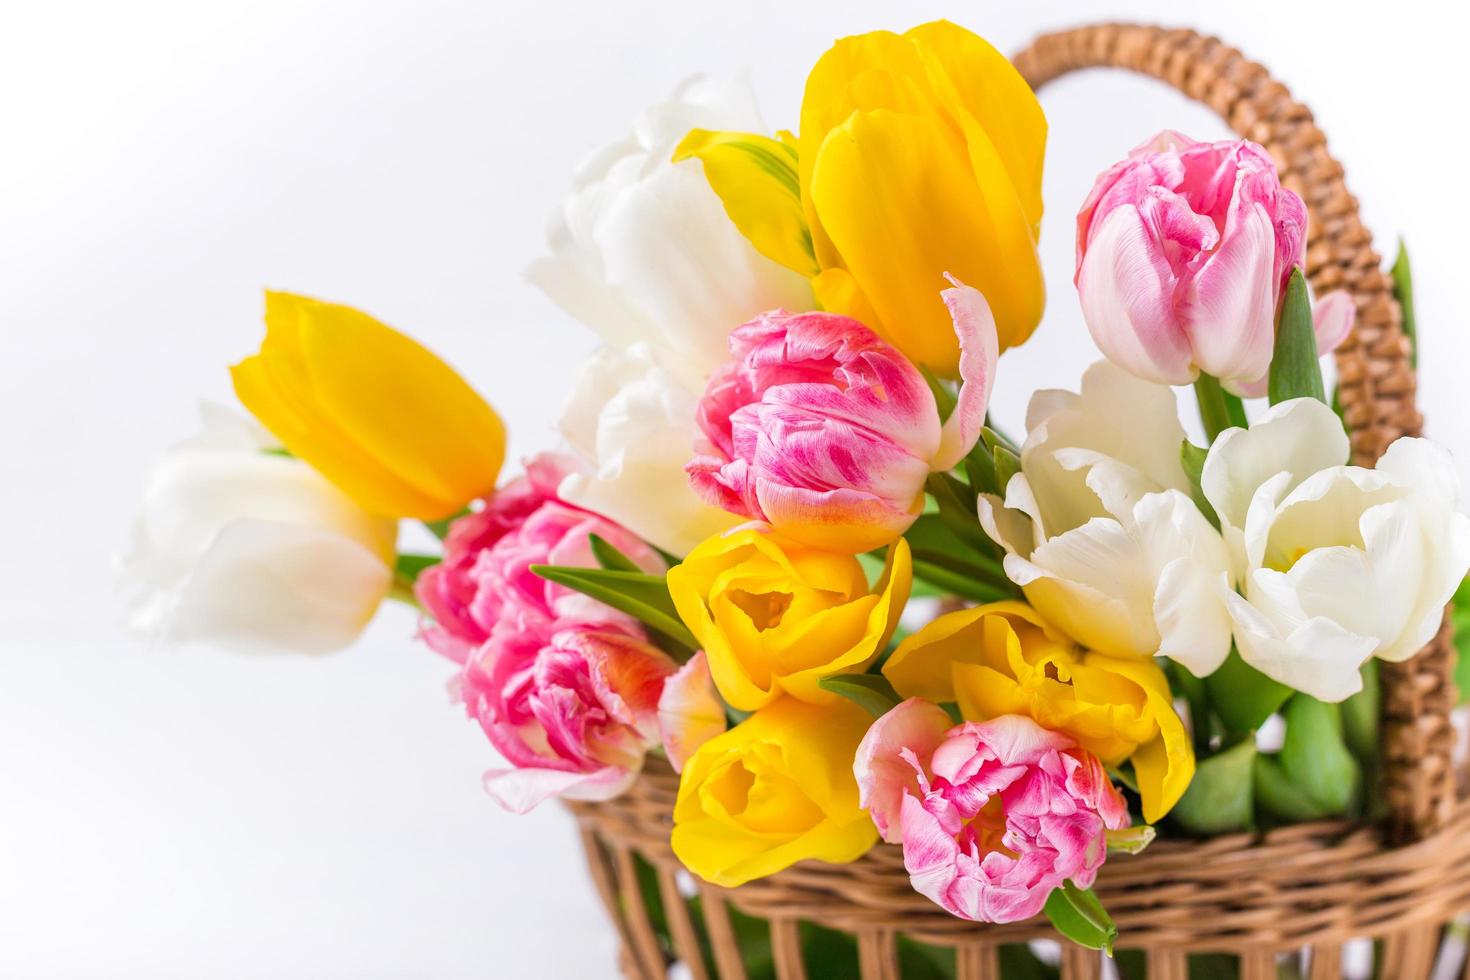 Spring multi-colored tulips in a wicker basket. Festive mood postcard photo